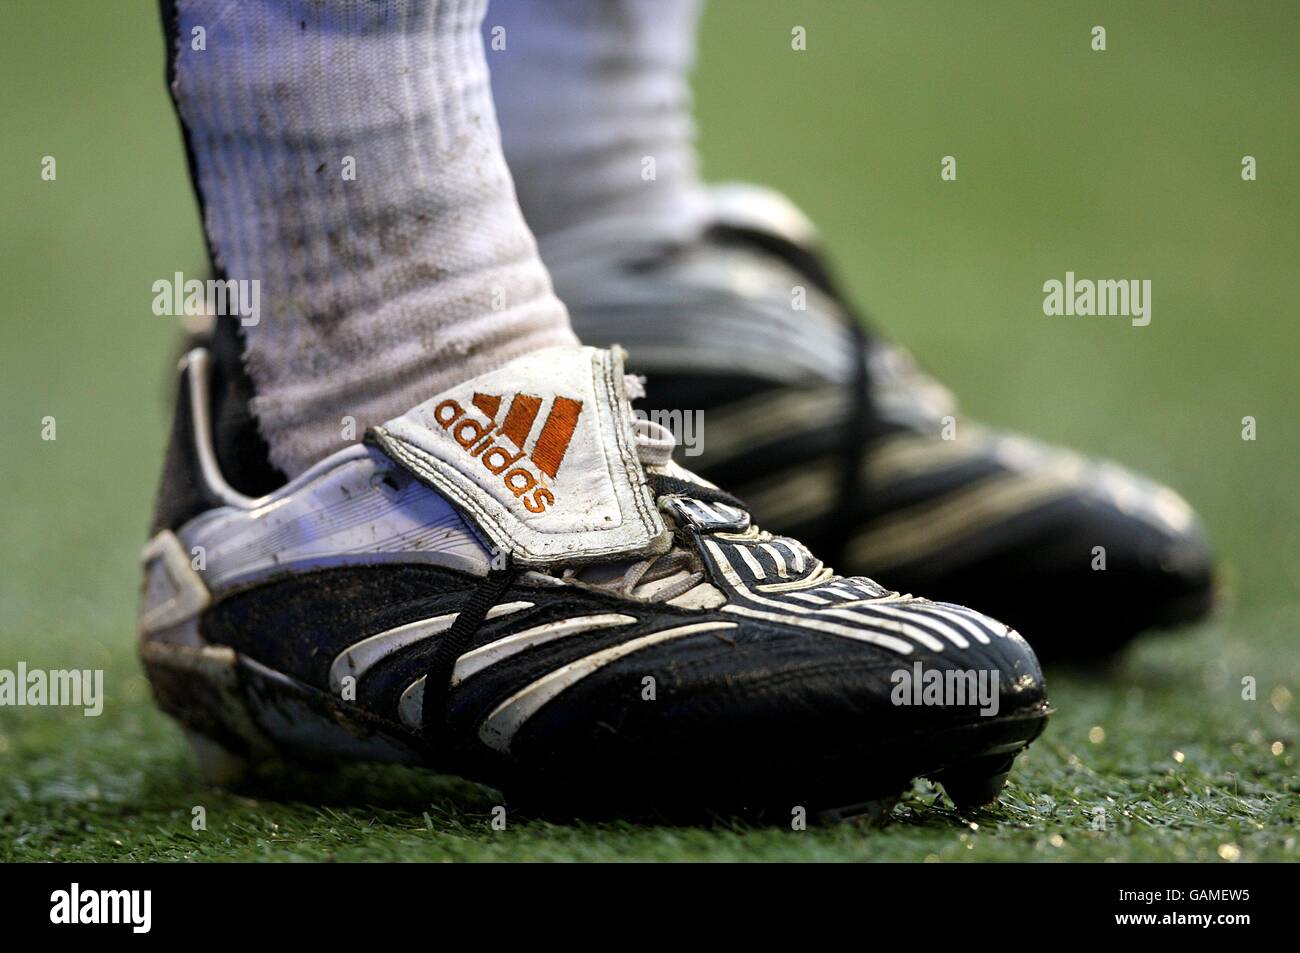 Adidas football boots hi-res stock images -